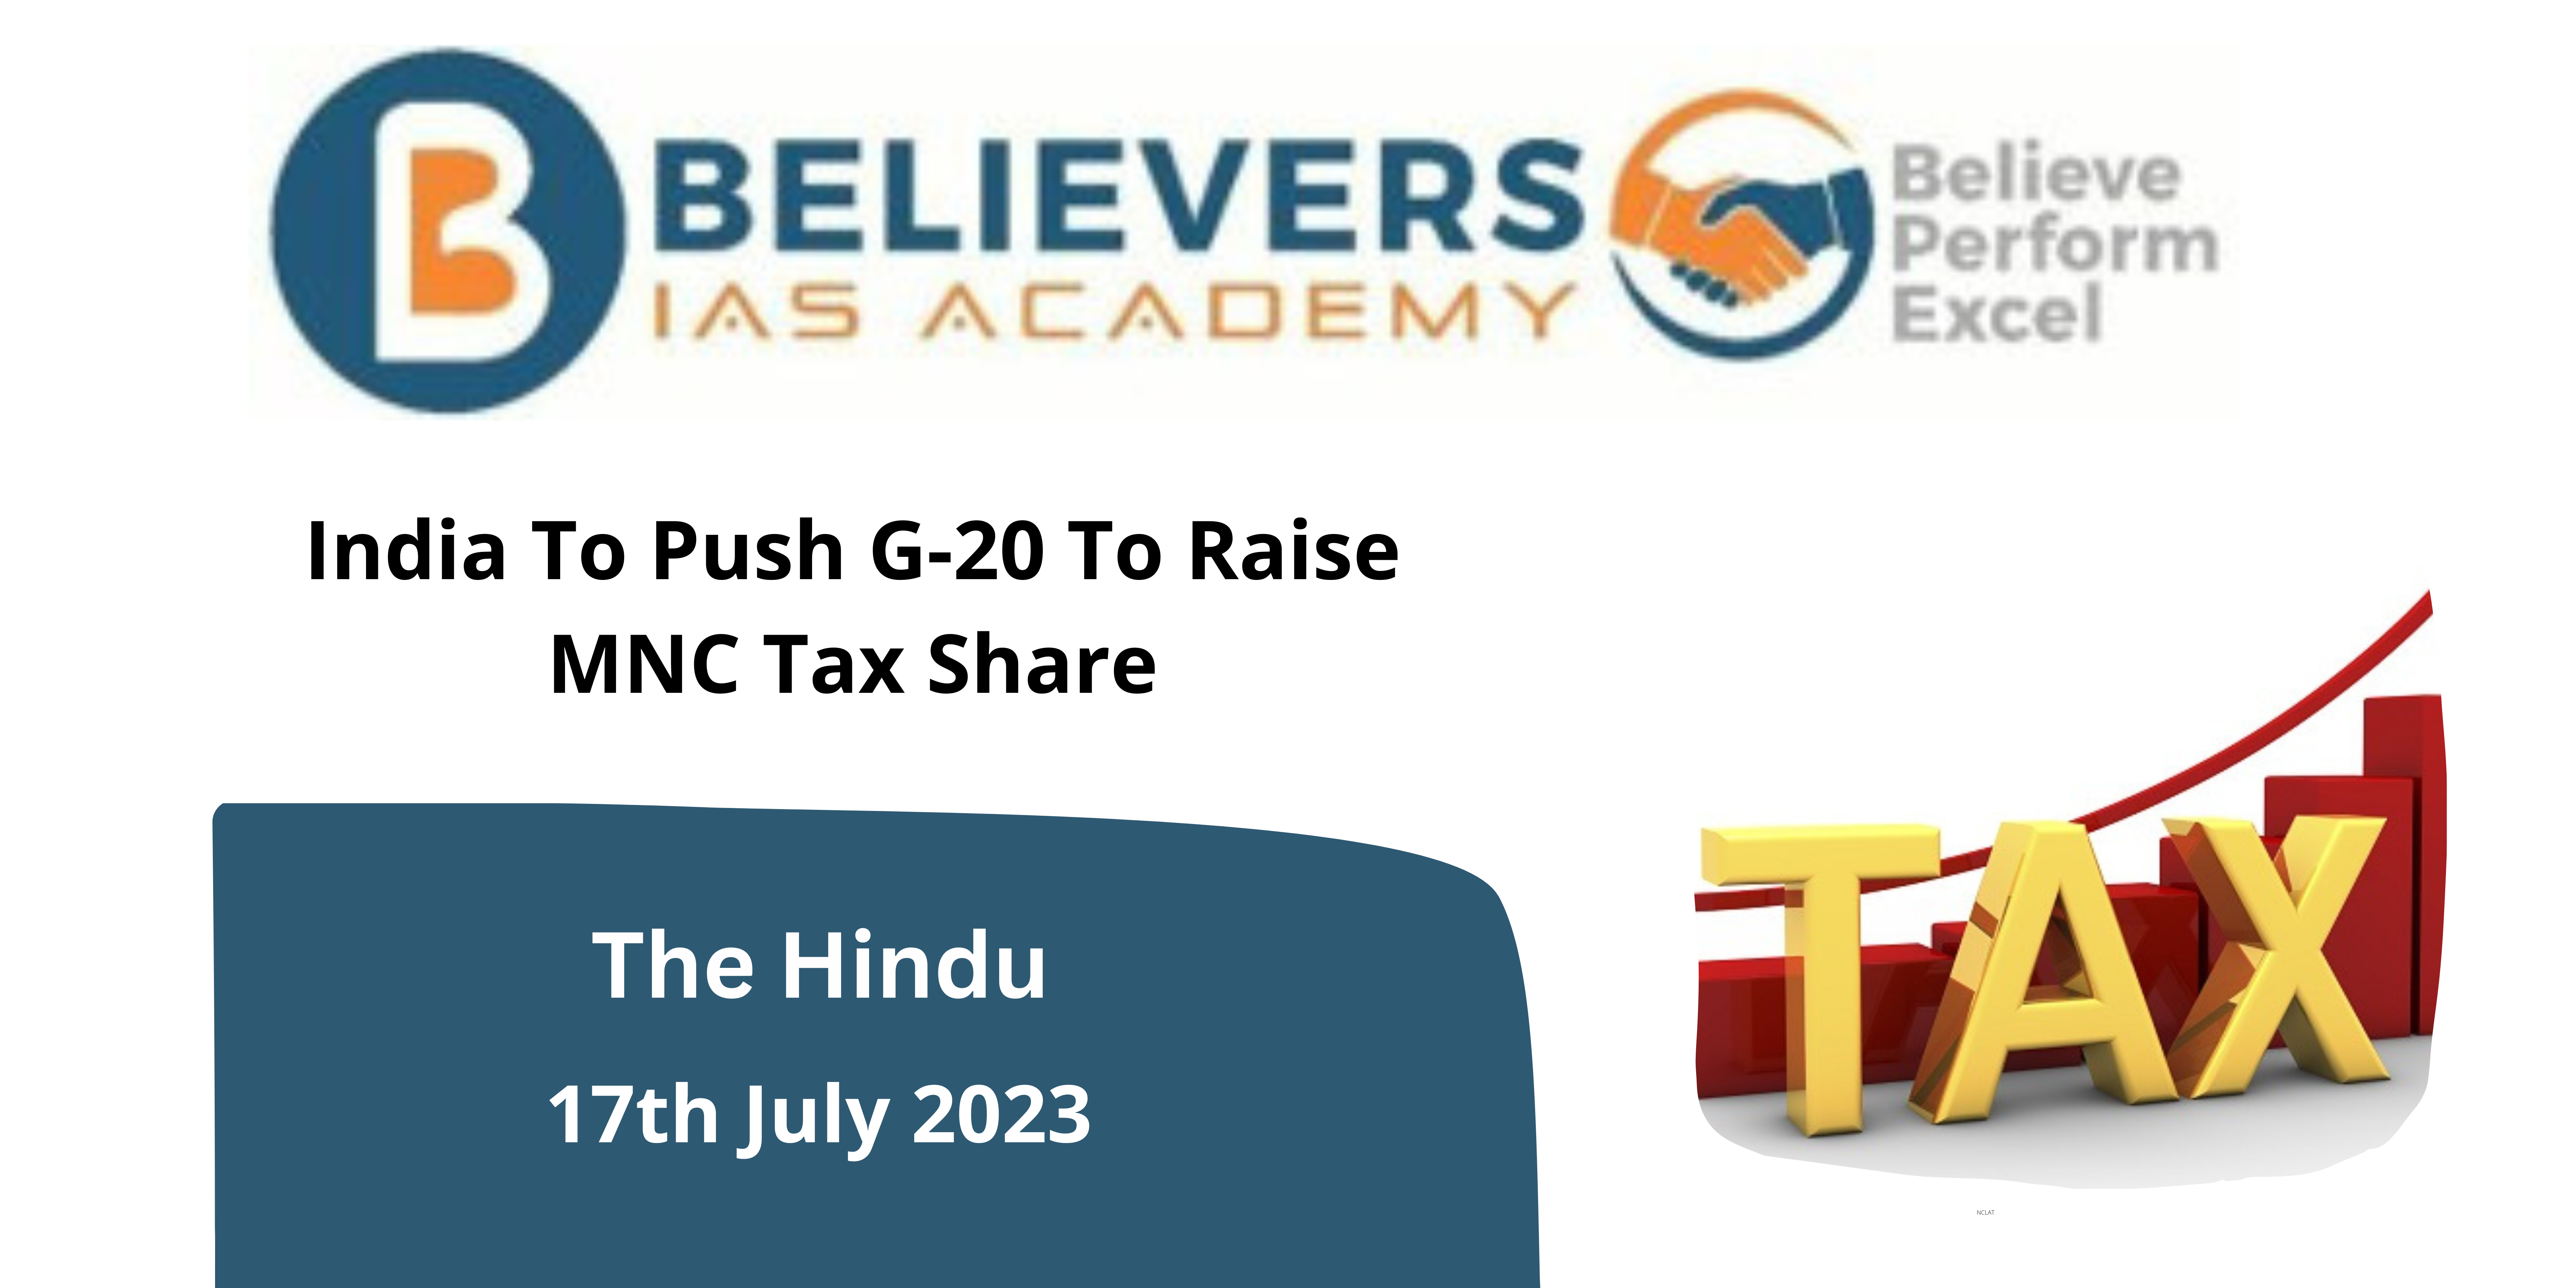 India To Push G-20 To Raise MNC Tax Share